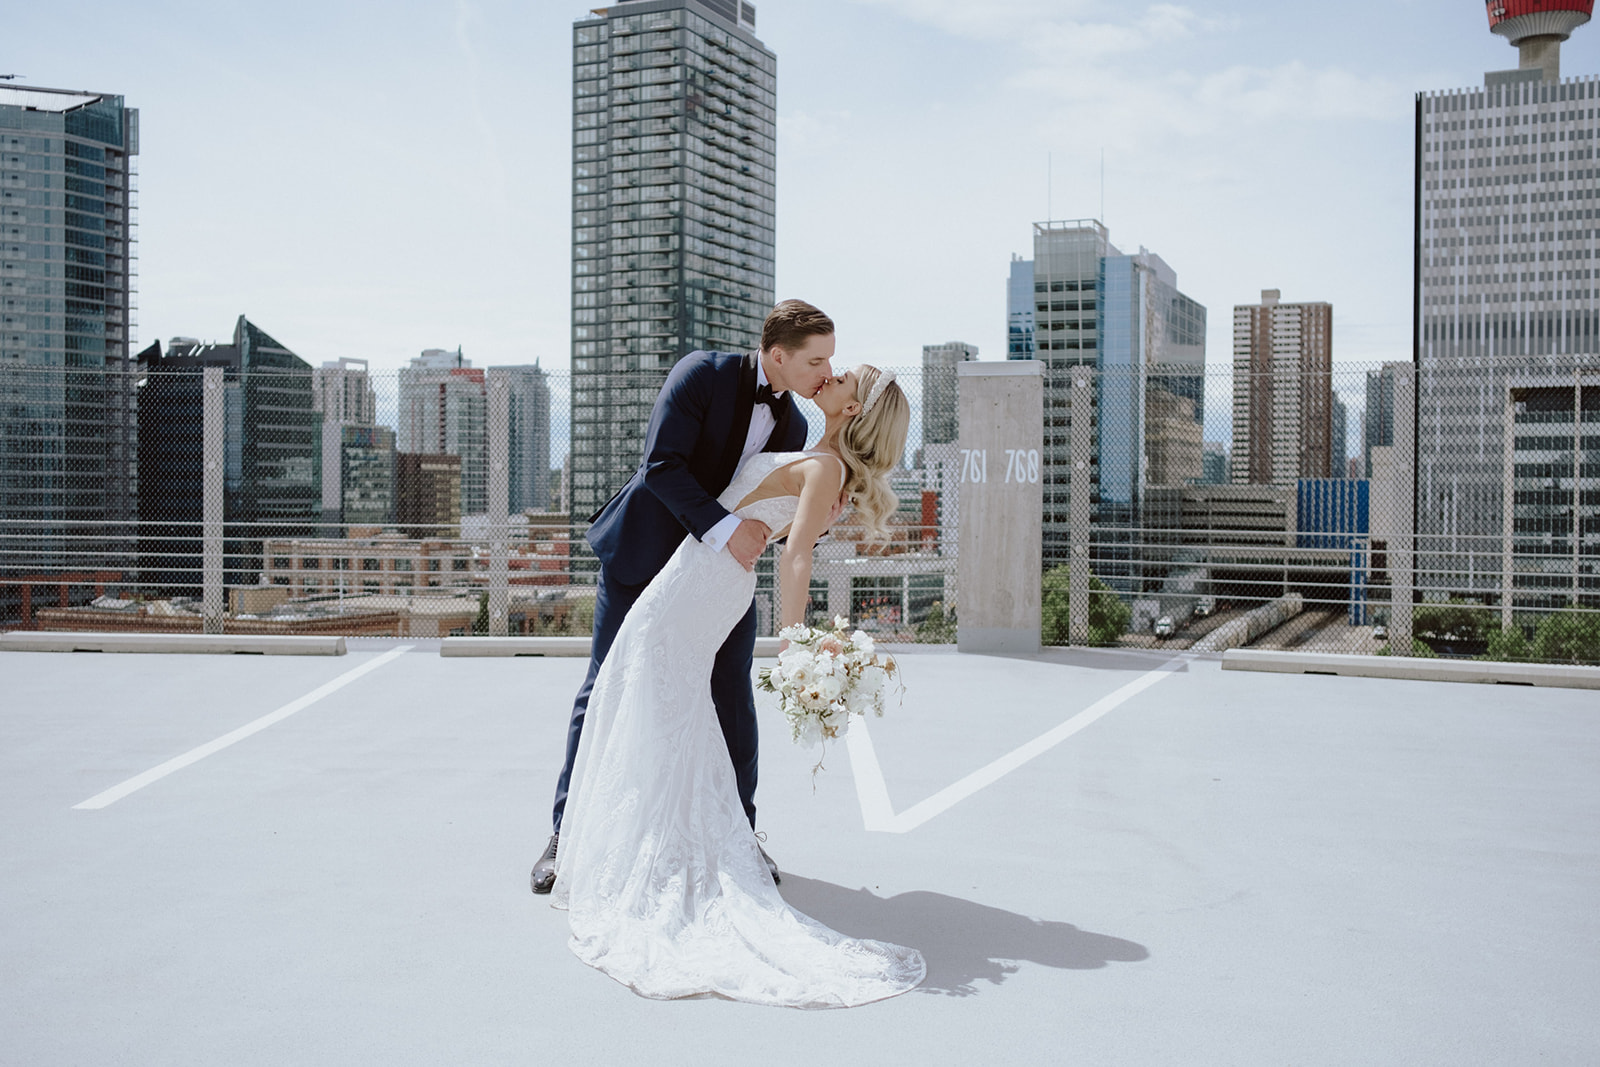 rooftop bridal portraits, rooftop wedding portraits, downtown wedding portraits, downtown Calgary